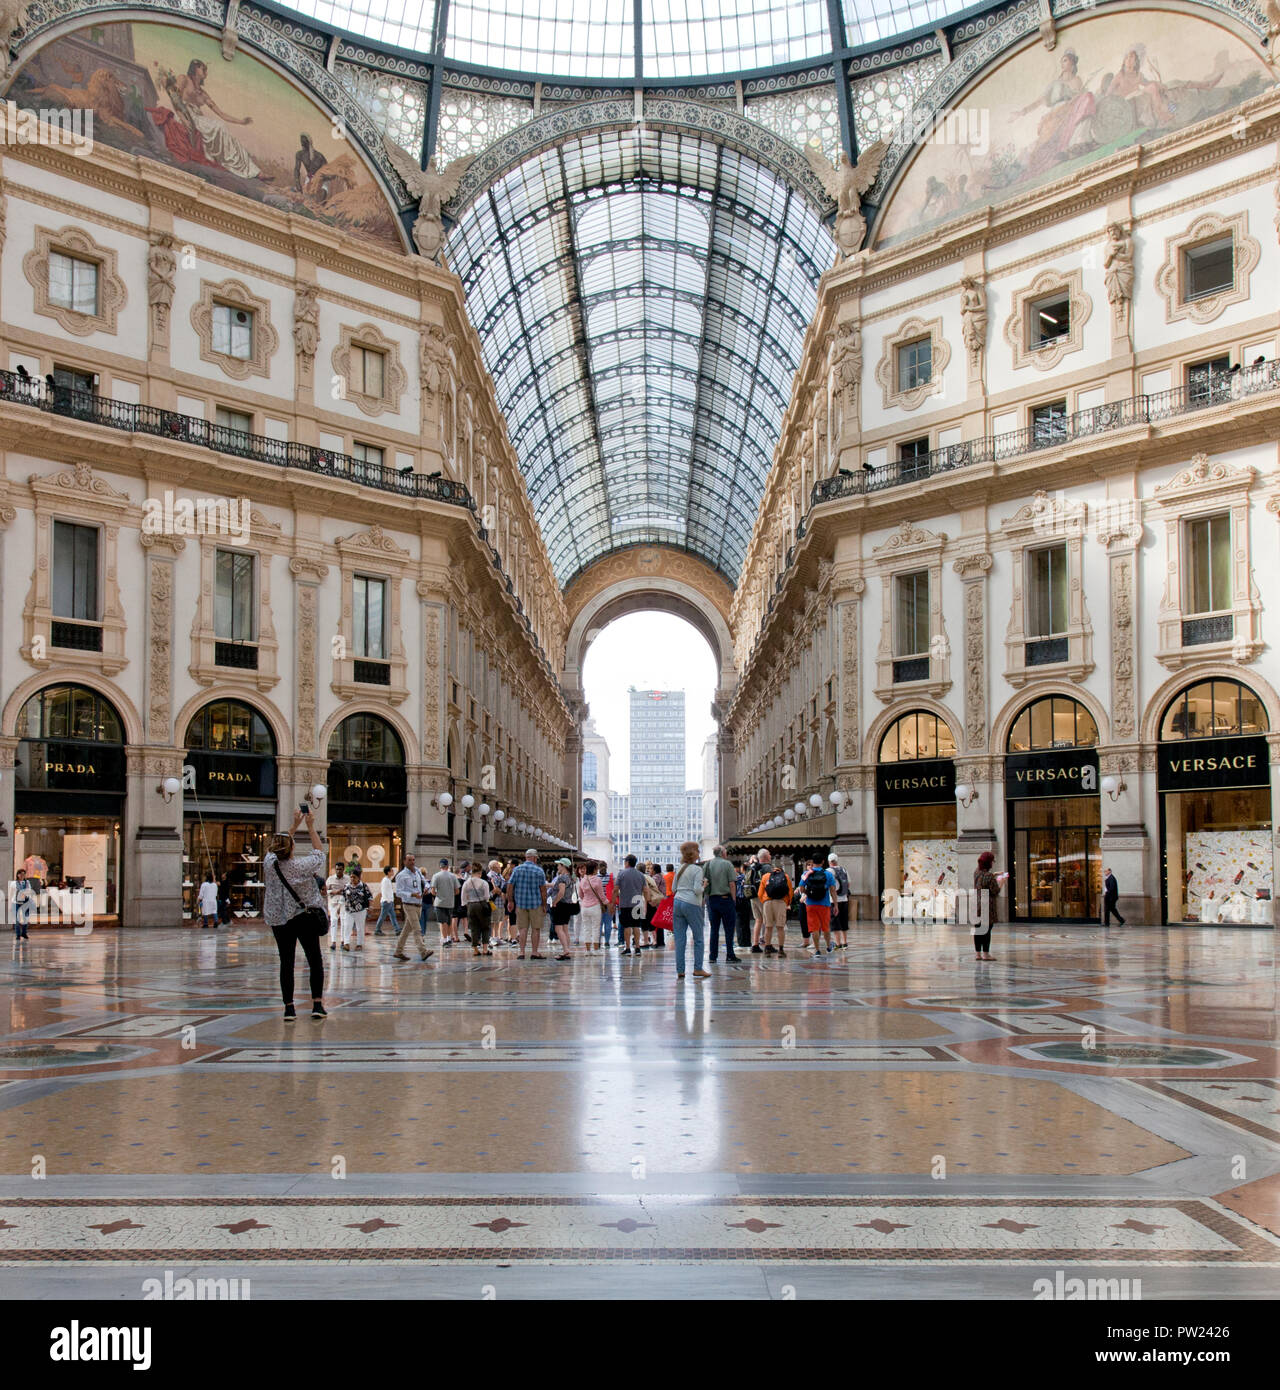 Shopping Arcade Galleria Vittorio Emanuele Ii Banque d'image et photos -  Alamy